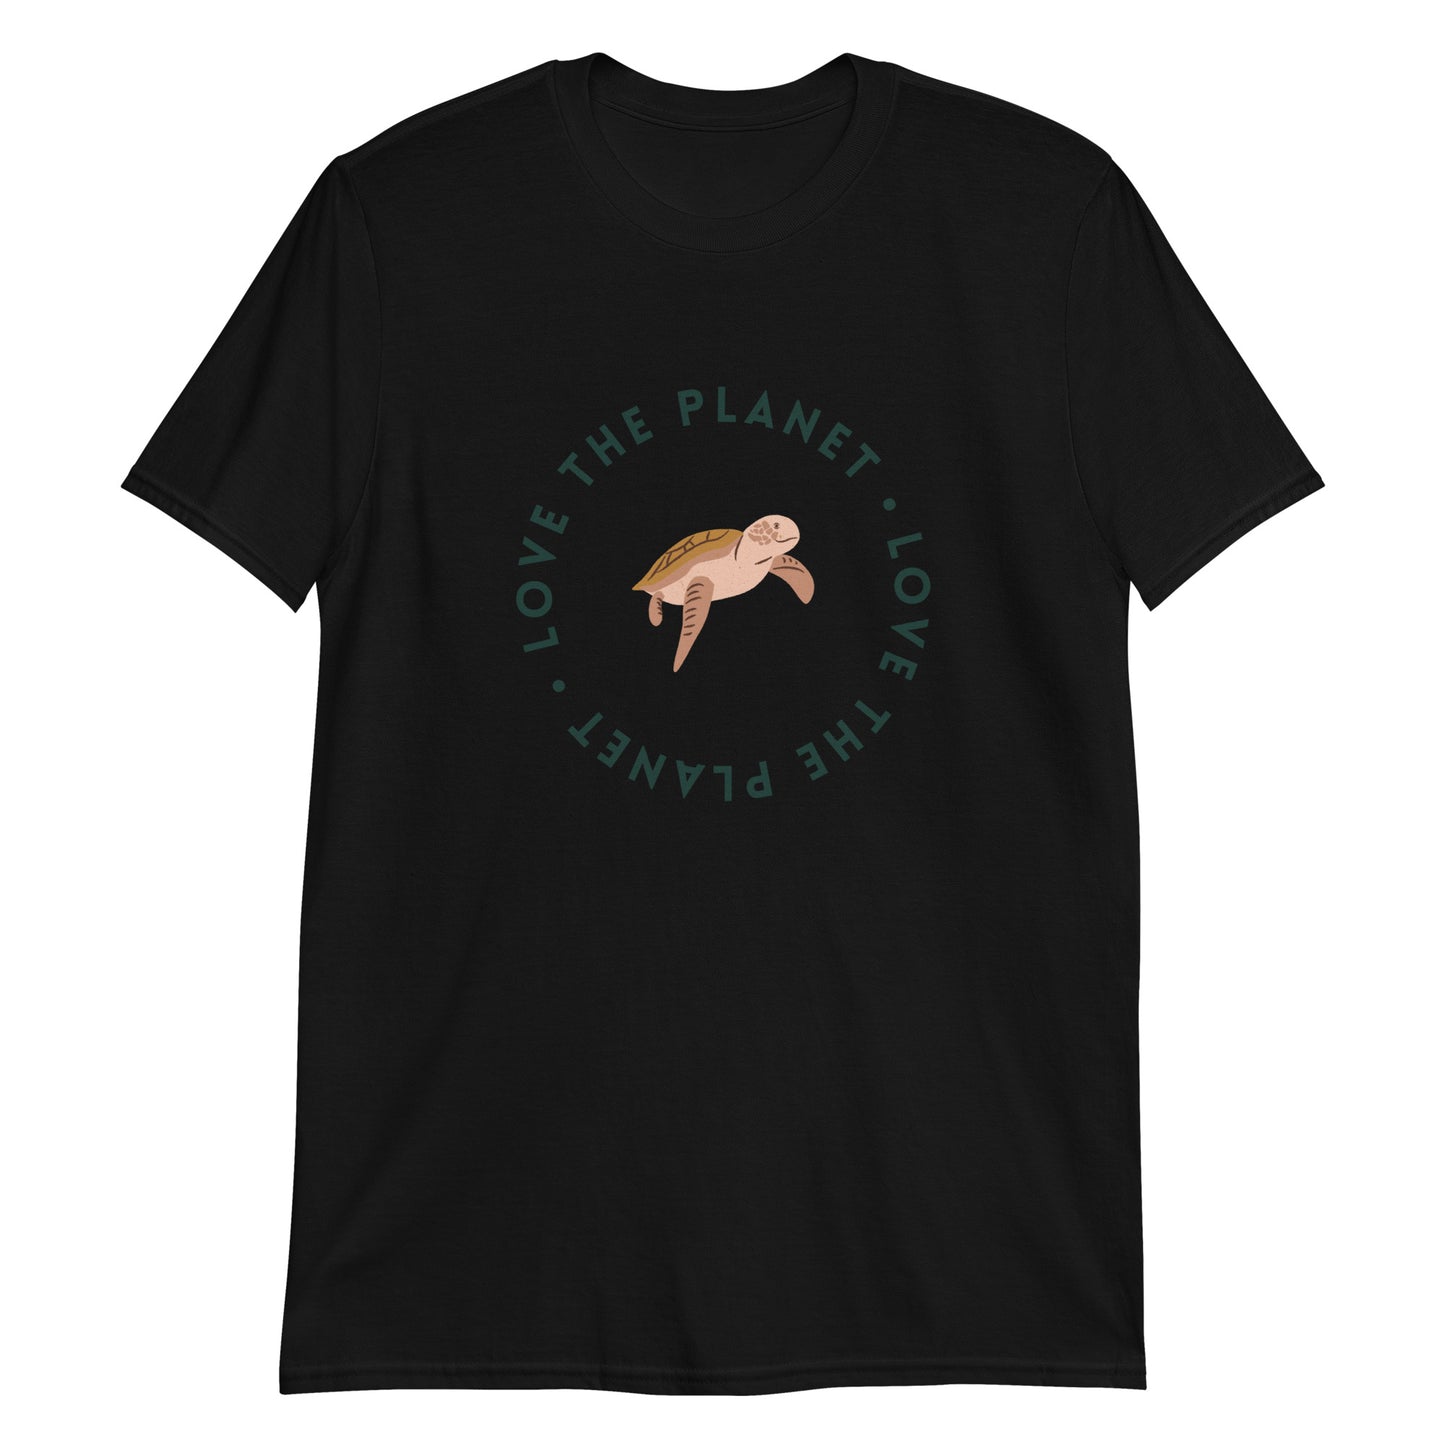 Love The Planet - Short-Sleeve Unisex T-Shirt Black Unisex T-shirt Animal